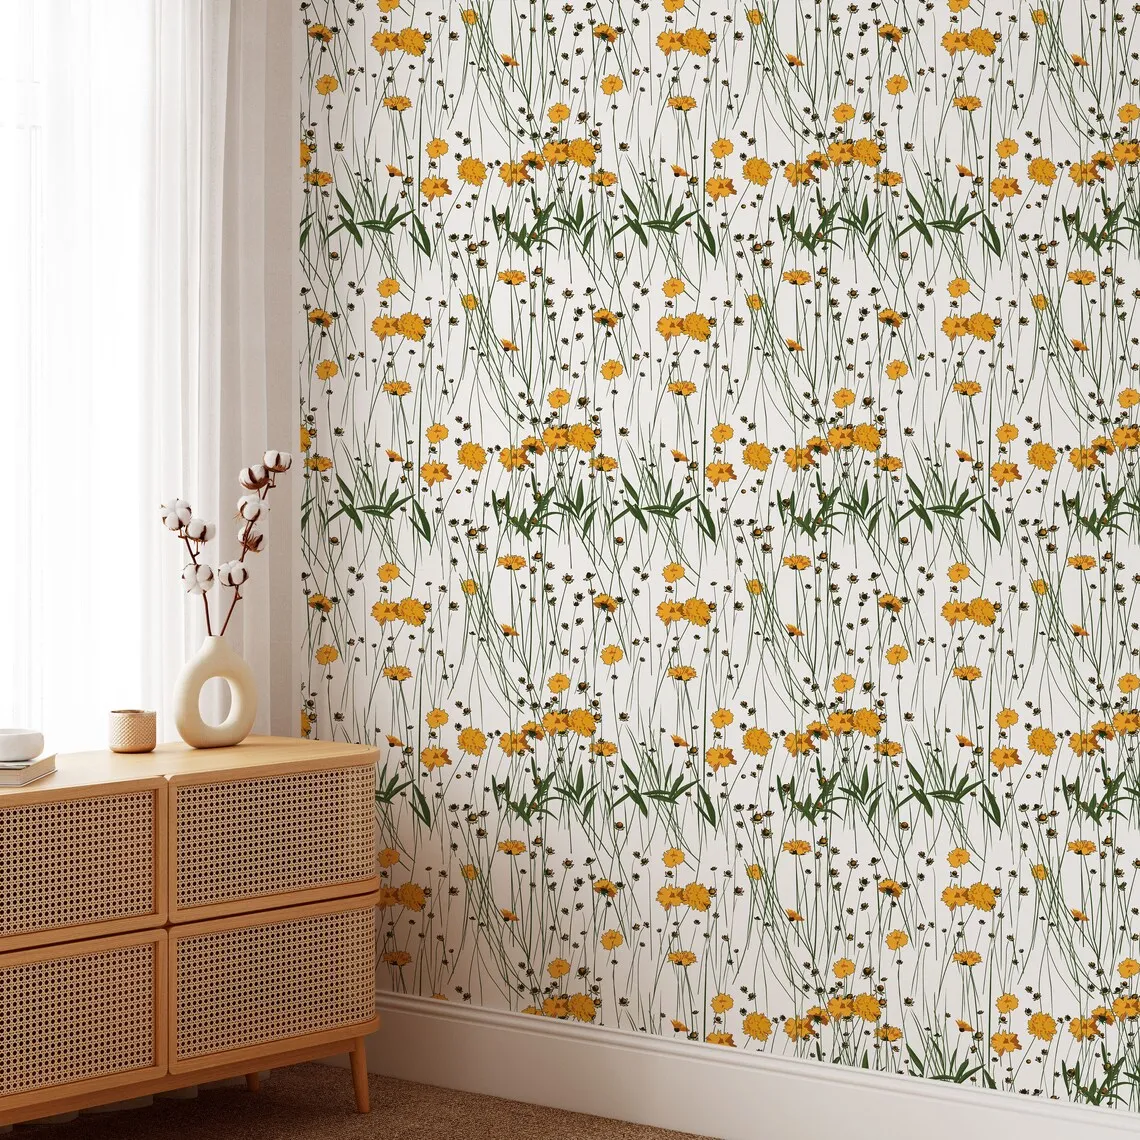 Custom Decorative Floral Art adhesive Wallpaper Bedroom Wall Murals,Botanic Odorless Peel And Stick Wallpaper for Home Decor